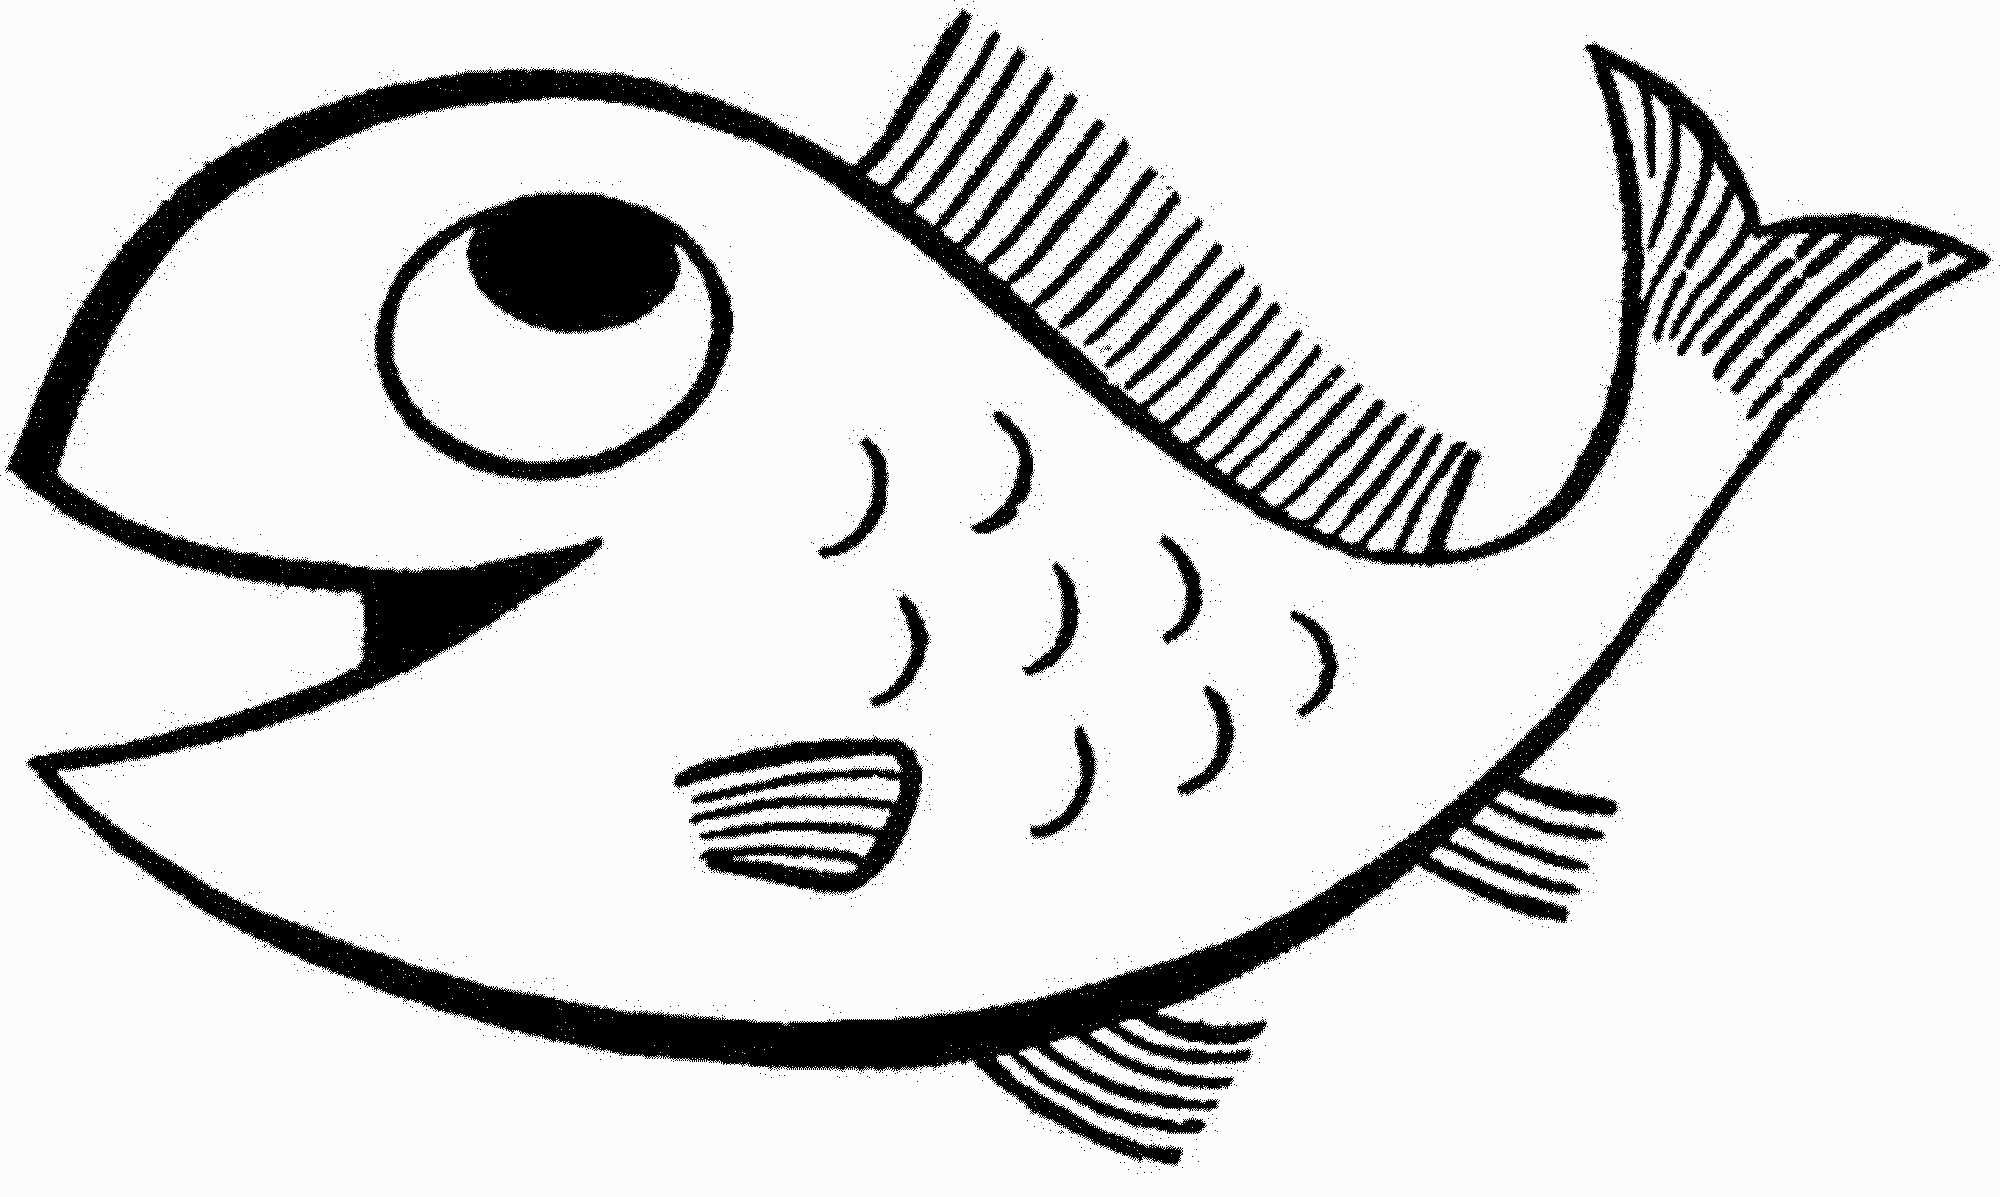 Gambar Sketsa Ikan